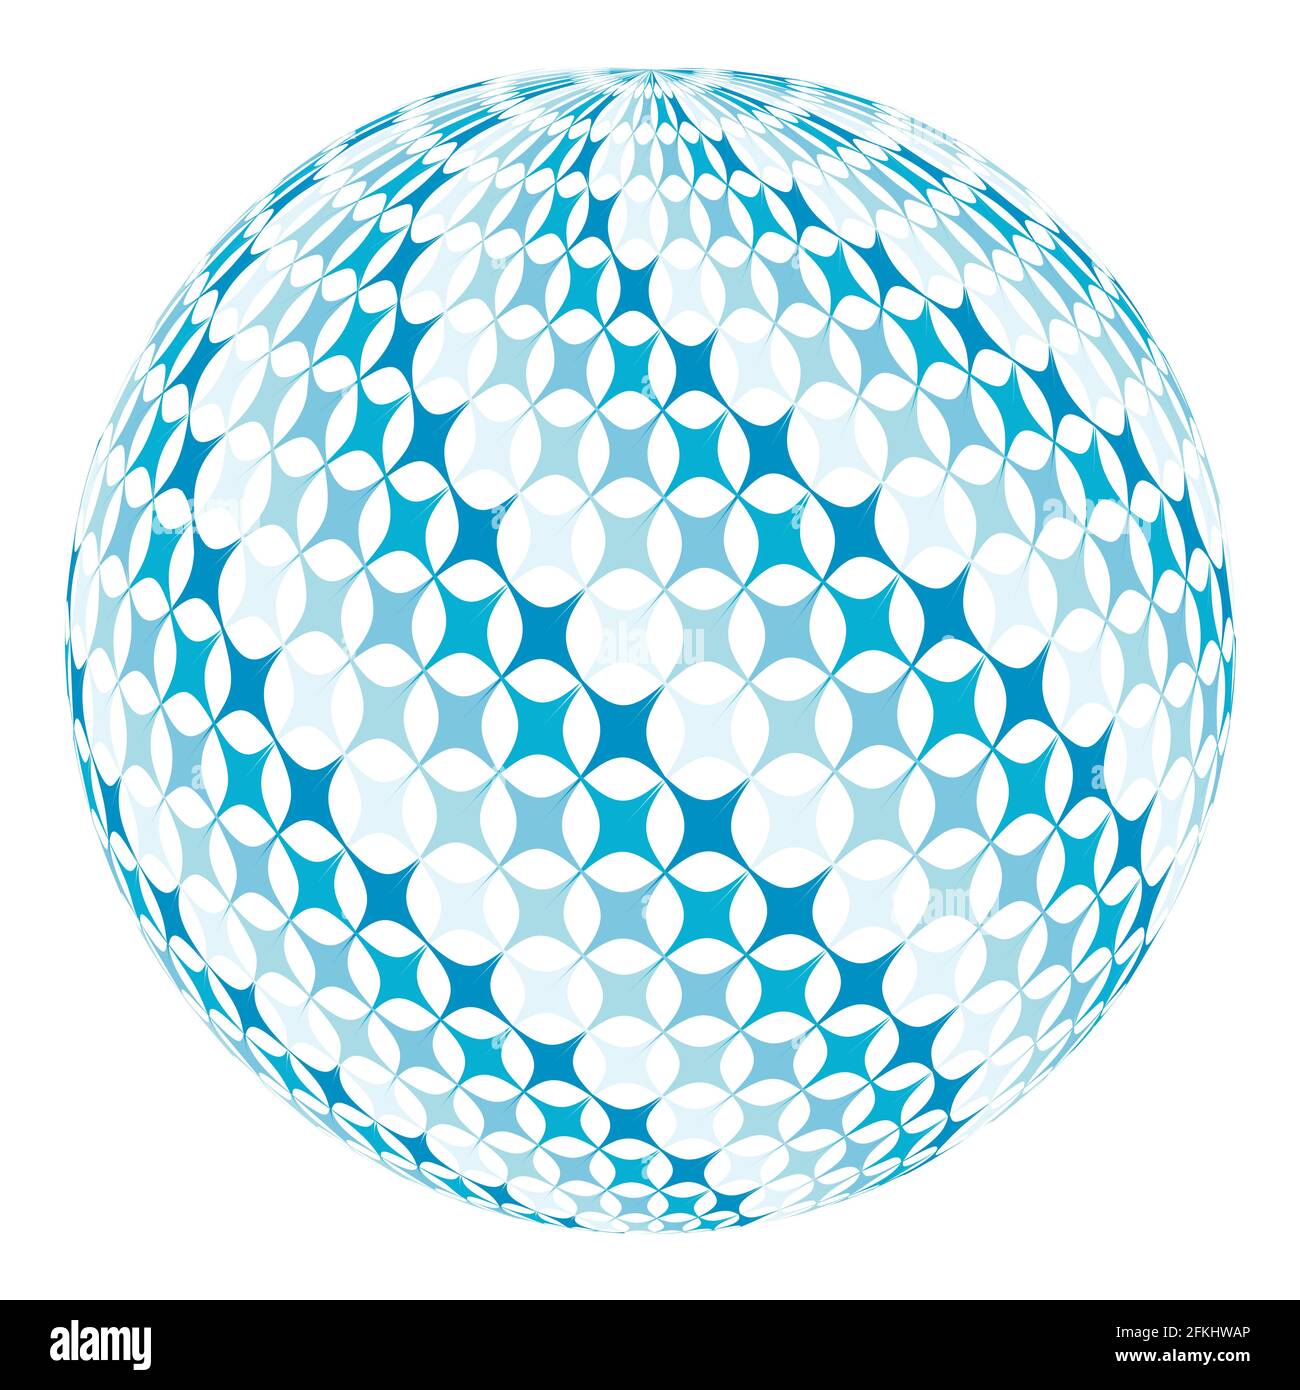 Ball mit diagonalem Wirbel Stock Vektor